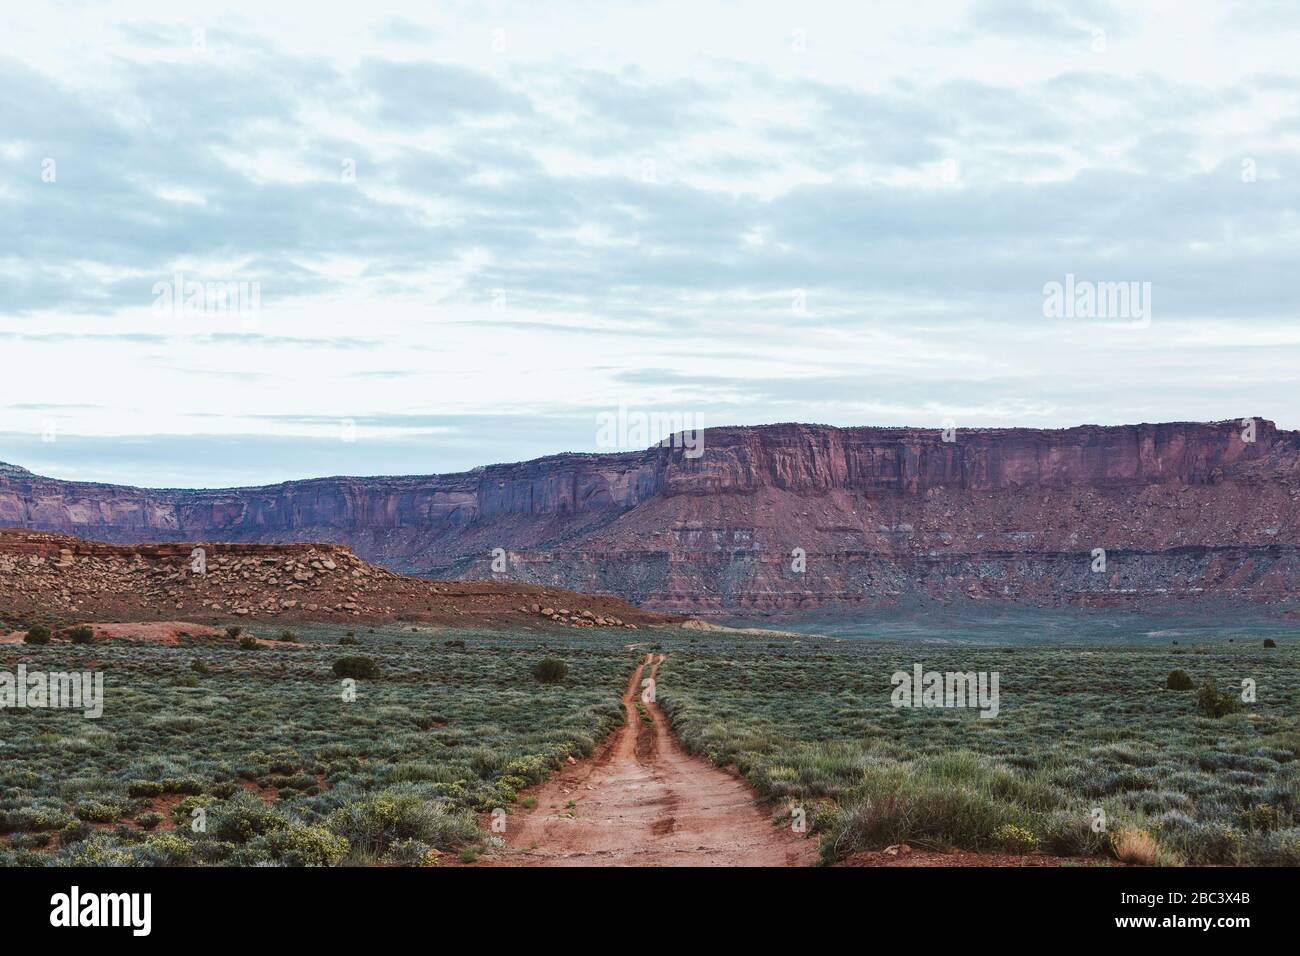 Geradeaus rote zwei Spur Feldweg führte zu nirgendwo in utah Wüste Stockfoto